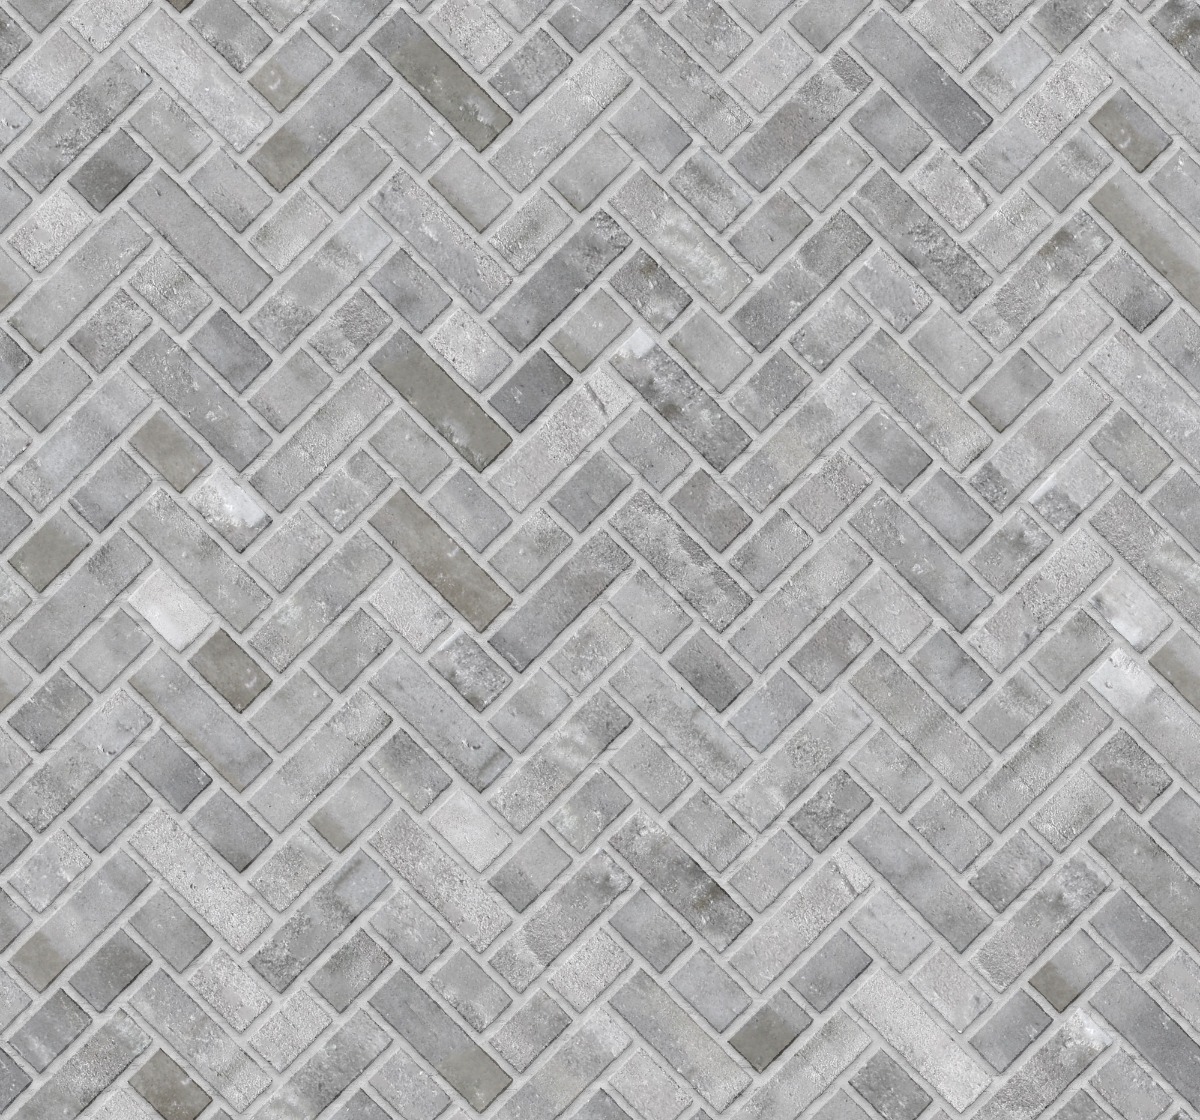 A seamless brick texture with finnish grey brick units arranged in a Broken Herringbone pattern